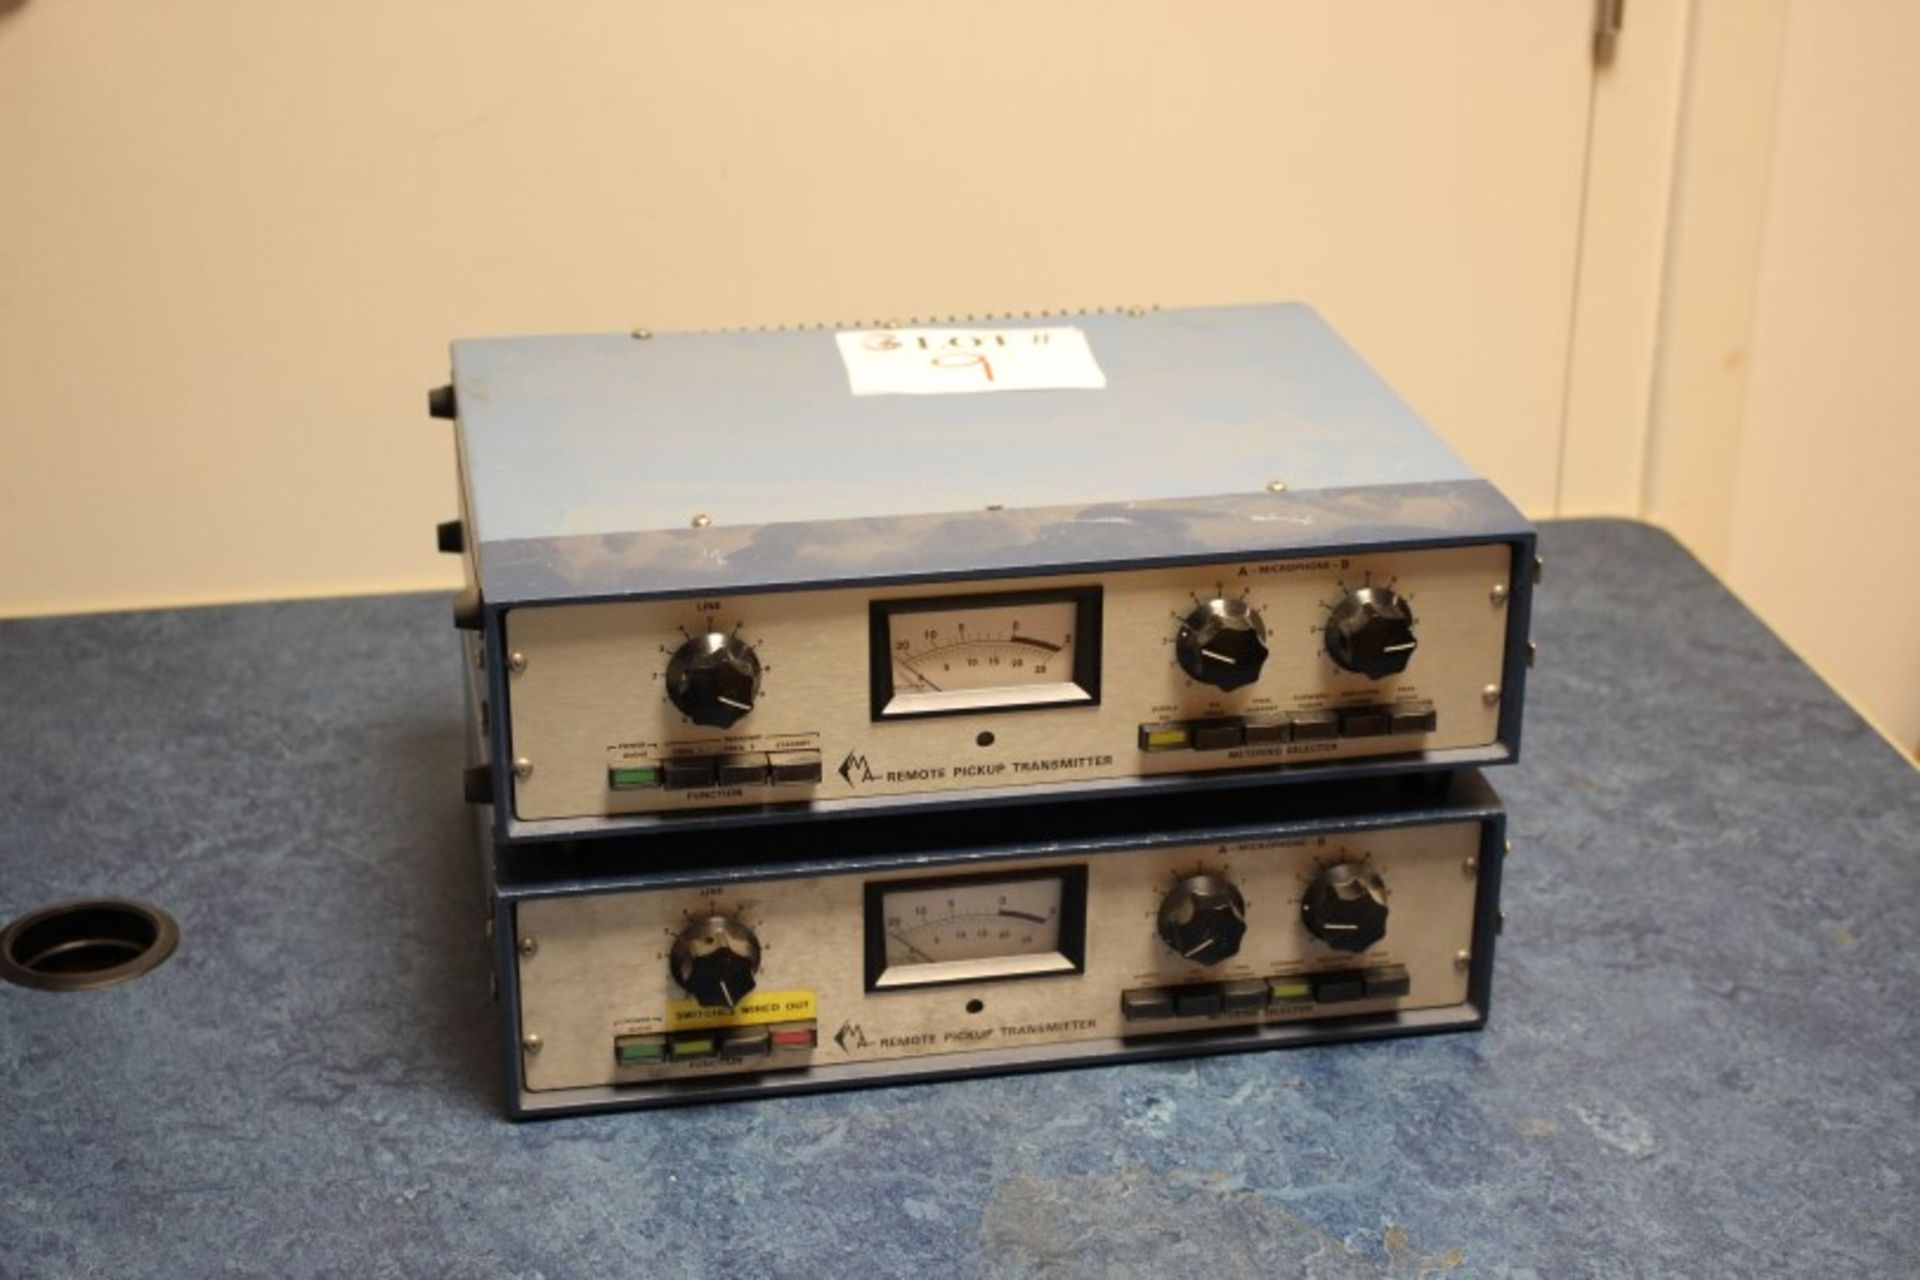 2 x Moseley Associates Inc. Remote Pickup Transmitter RPL 4C - Vintage Broadcast Transmitters